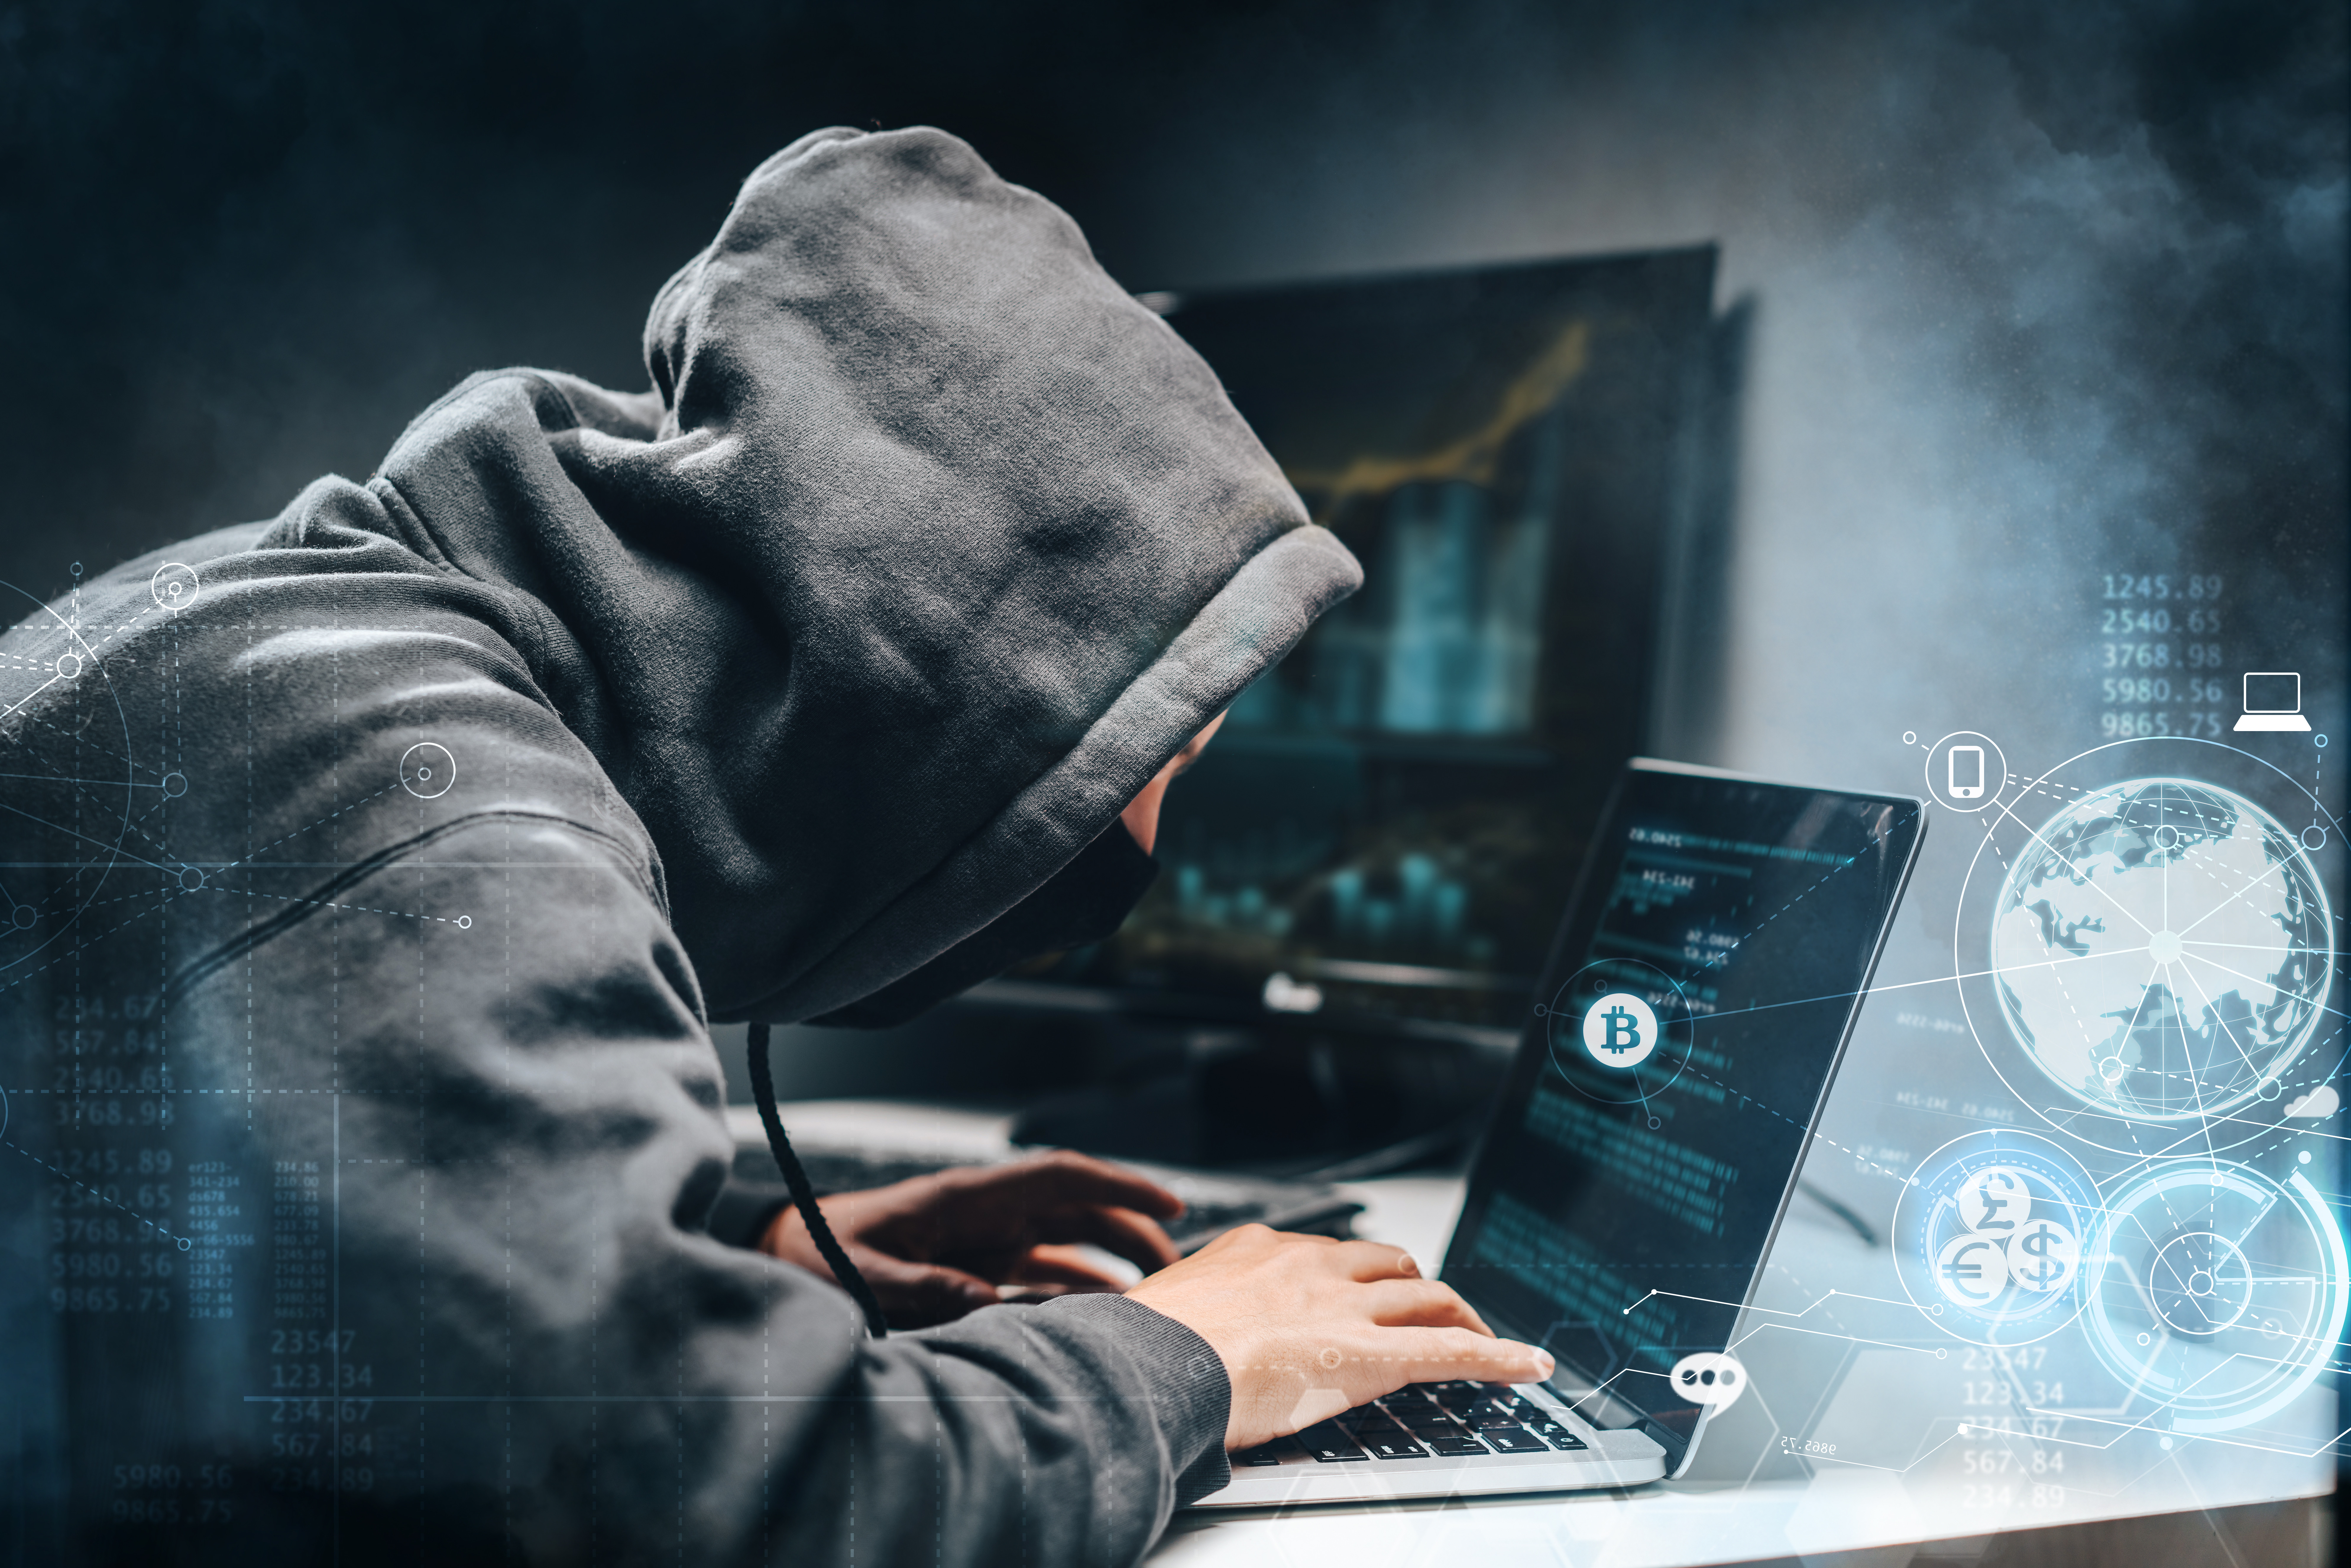 REKTify: Identifying millions in stolen cryptocurrency.